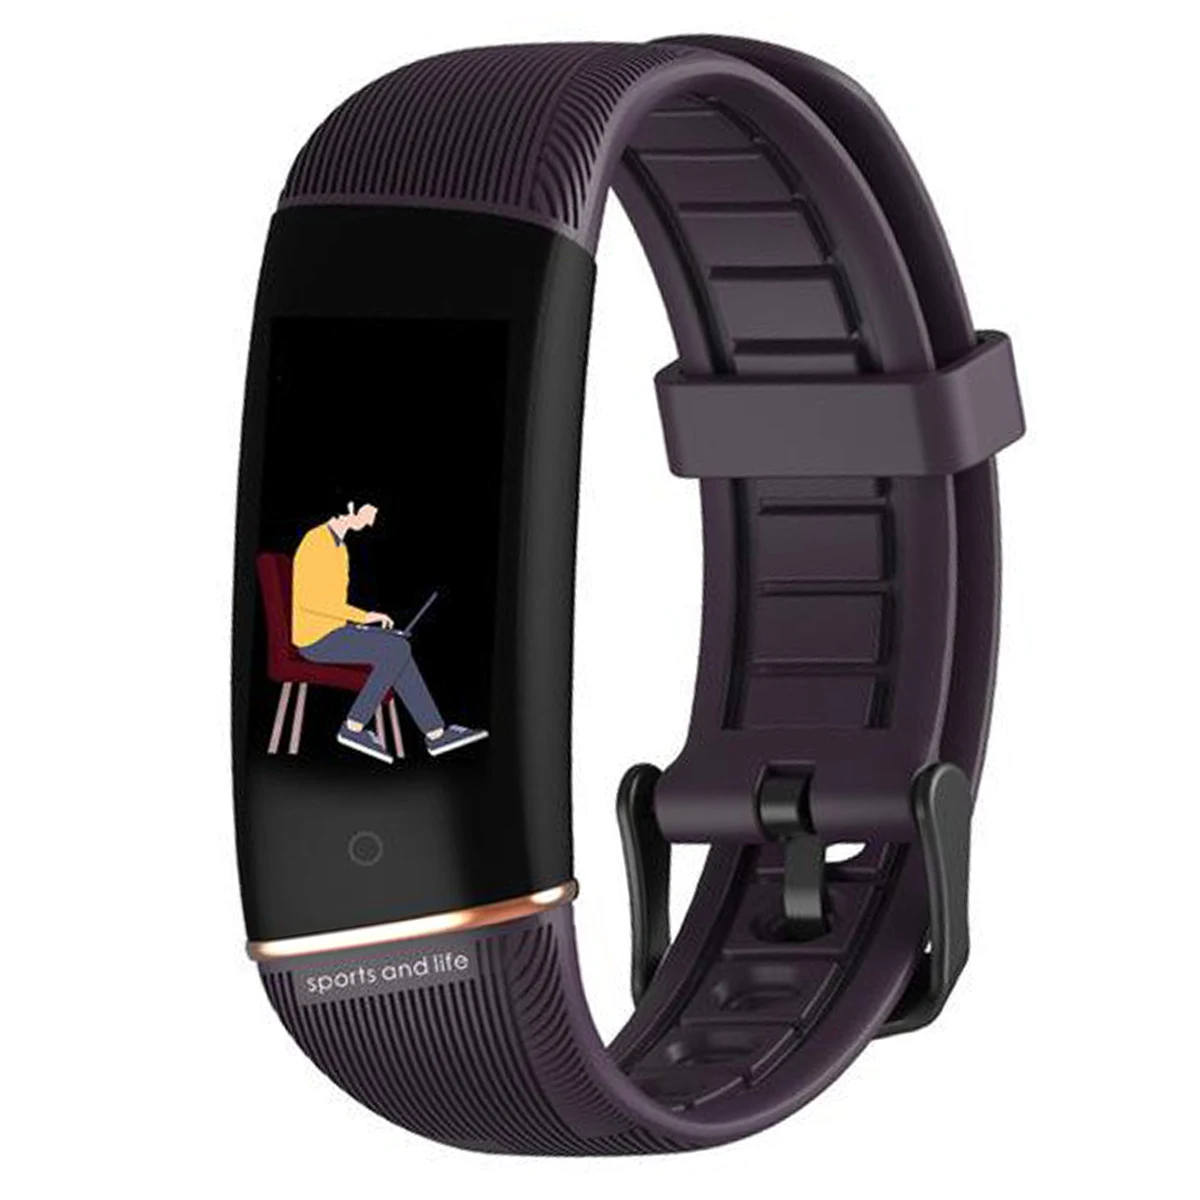 

0.96inch E98 Smart Bracelet Fitness Track Heart Rate Blood Pressure Monitor IP67 Waterproof Smart Band Smart Sports Watch